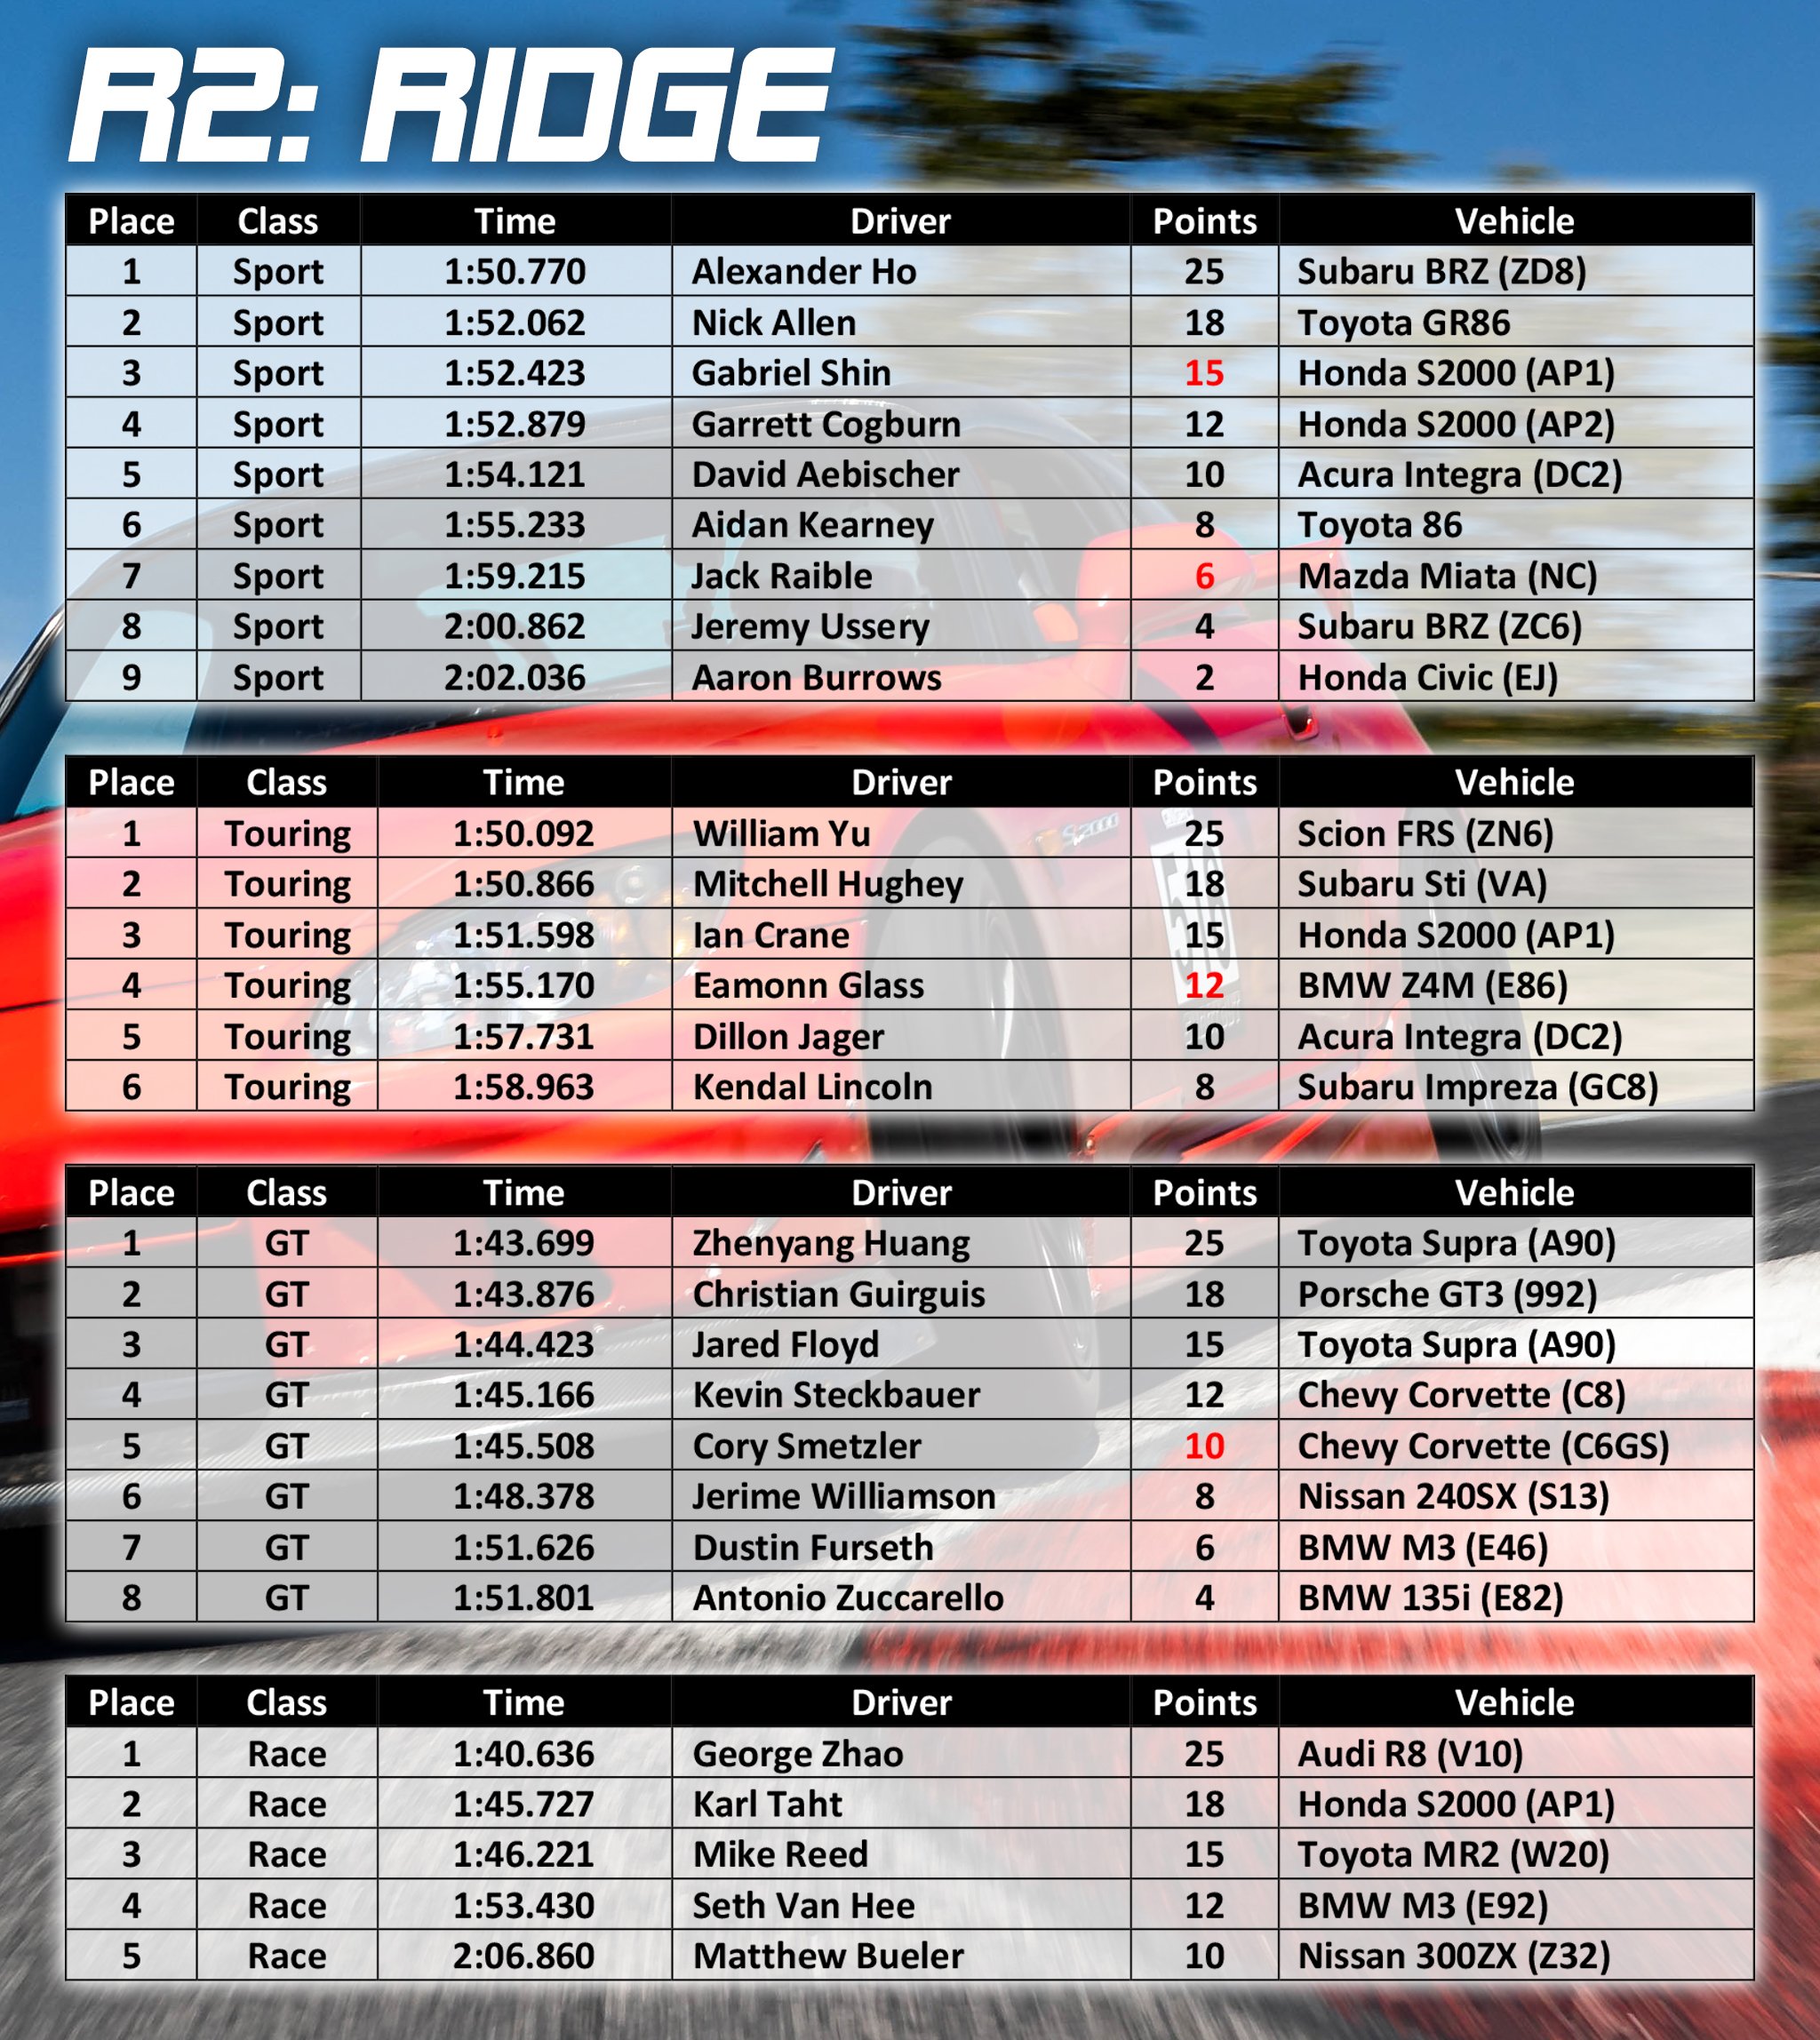 Talleres Remedios Reserves Live Score, 2023 Fixtures, Results